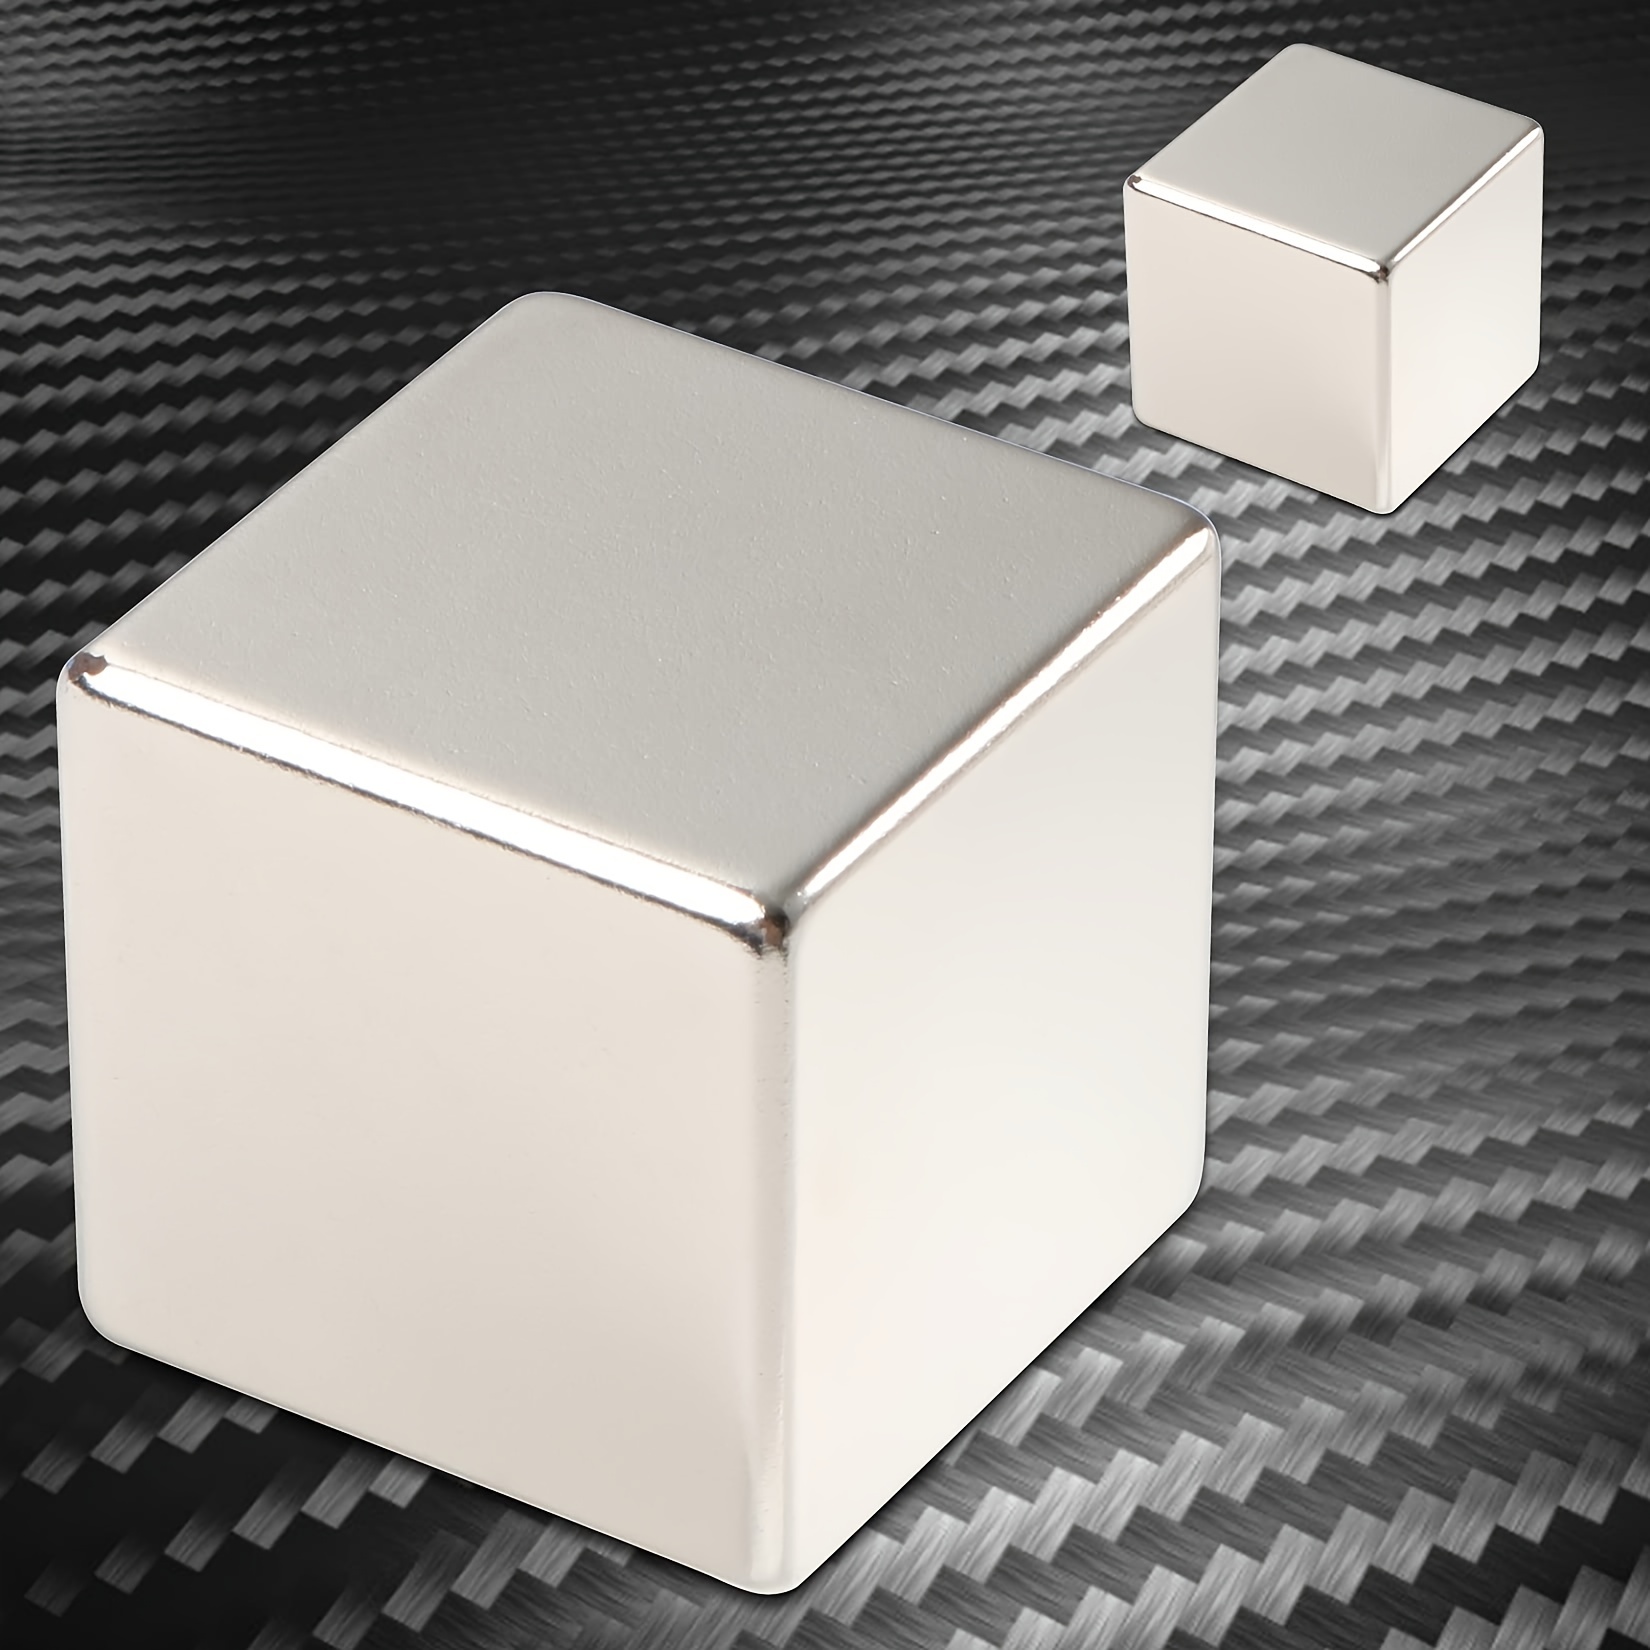 20Pcs N52 Super Strong Block Rare Earth Neodymium Small Magnet 10X5X2mm  Magnets